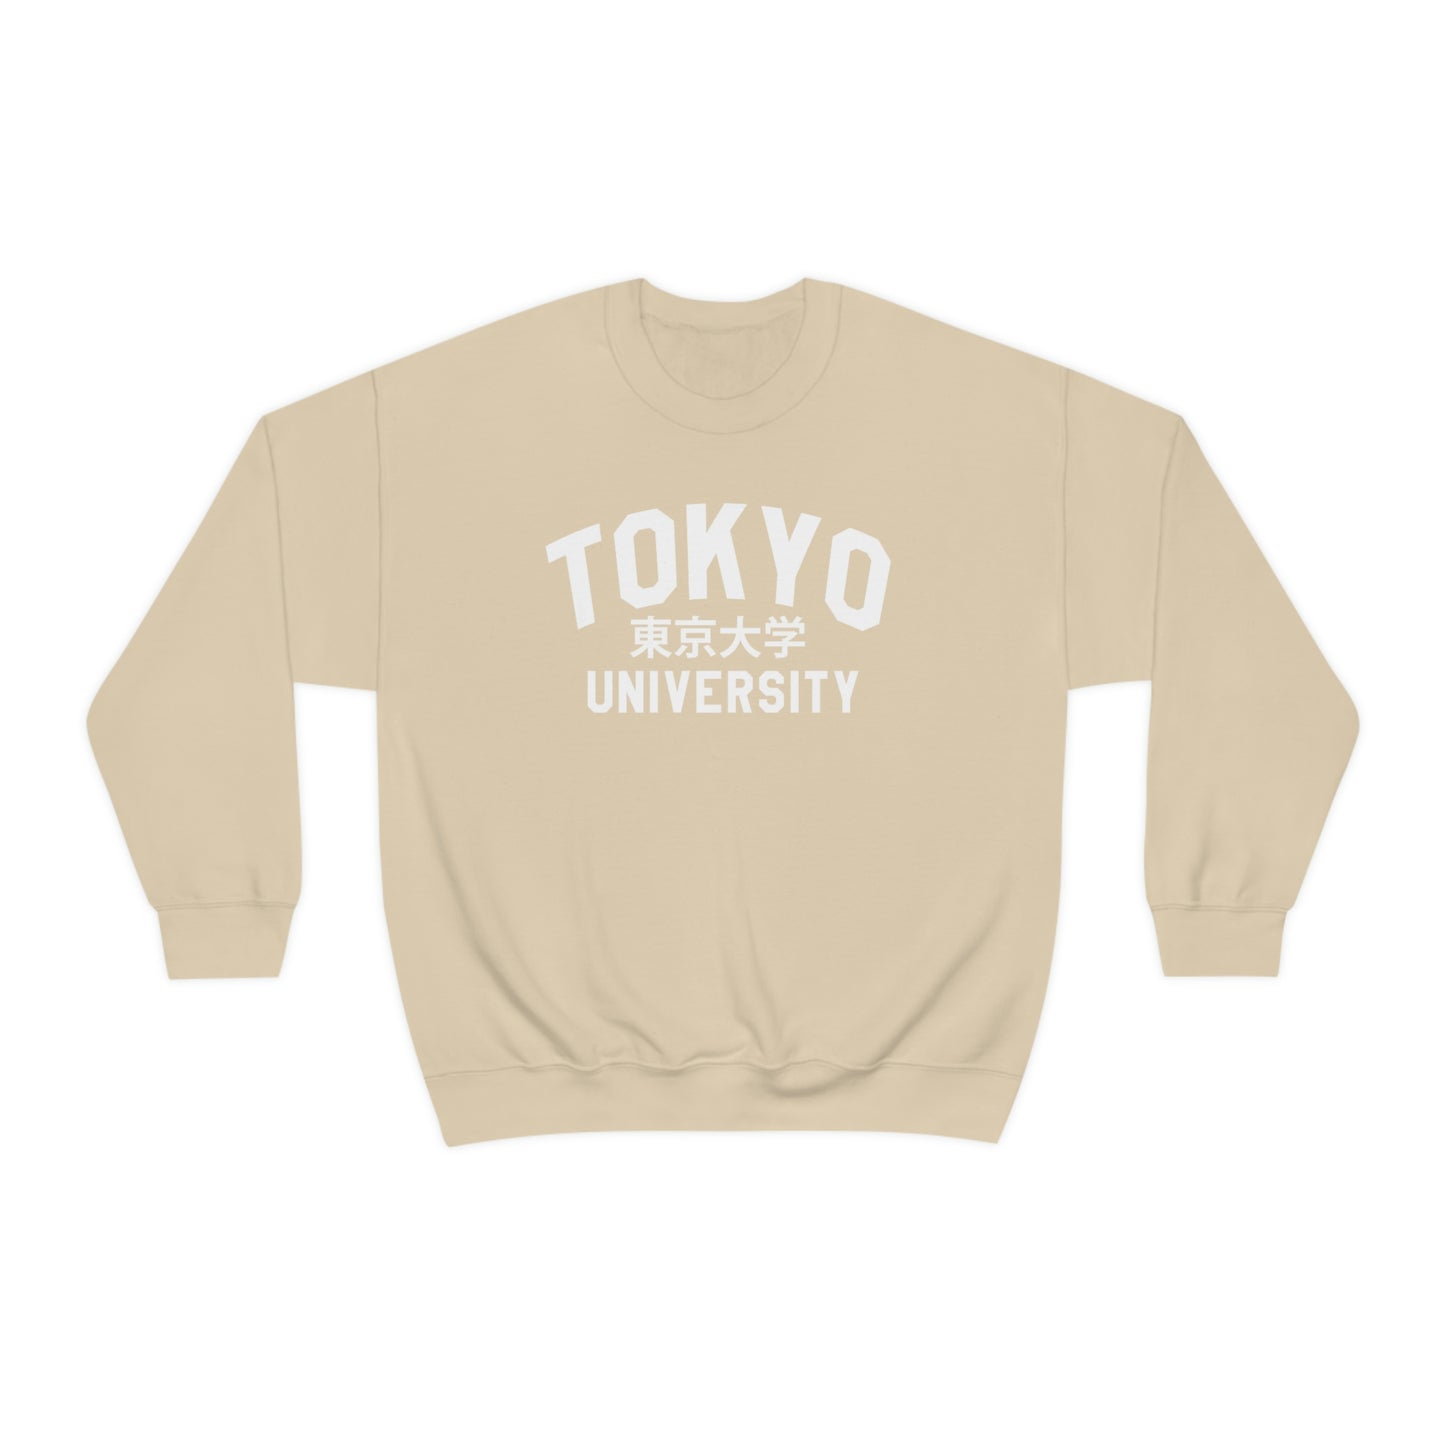 Tokyo University College Sweater Minimalist Crewneck Sweatshirt for Men and Women Souvenir Japan Colleges